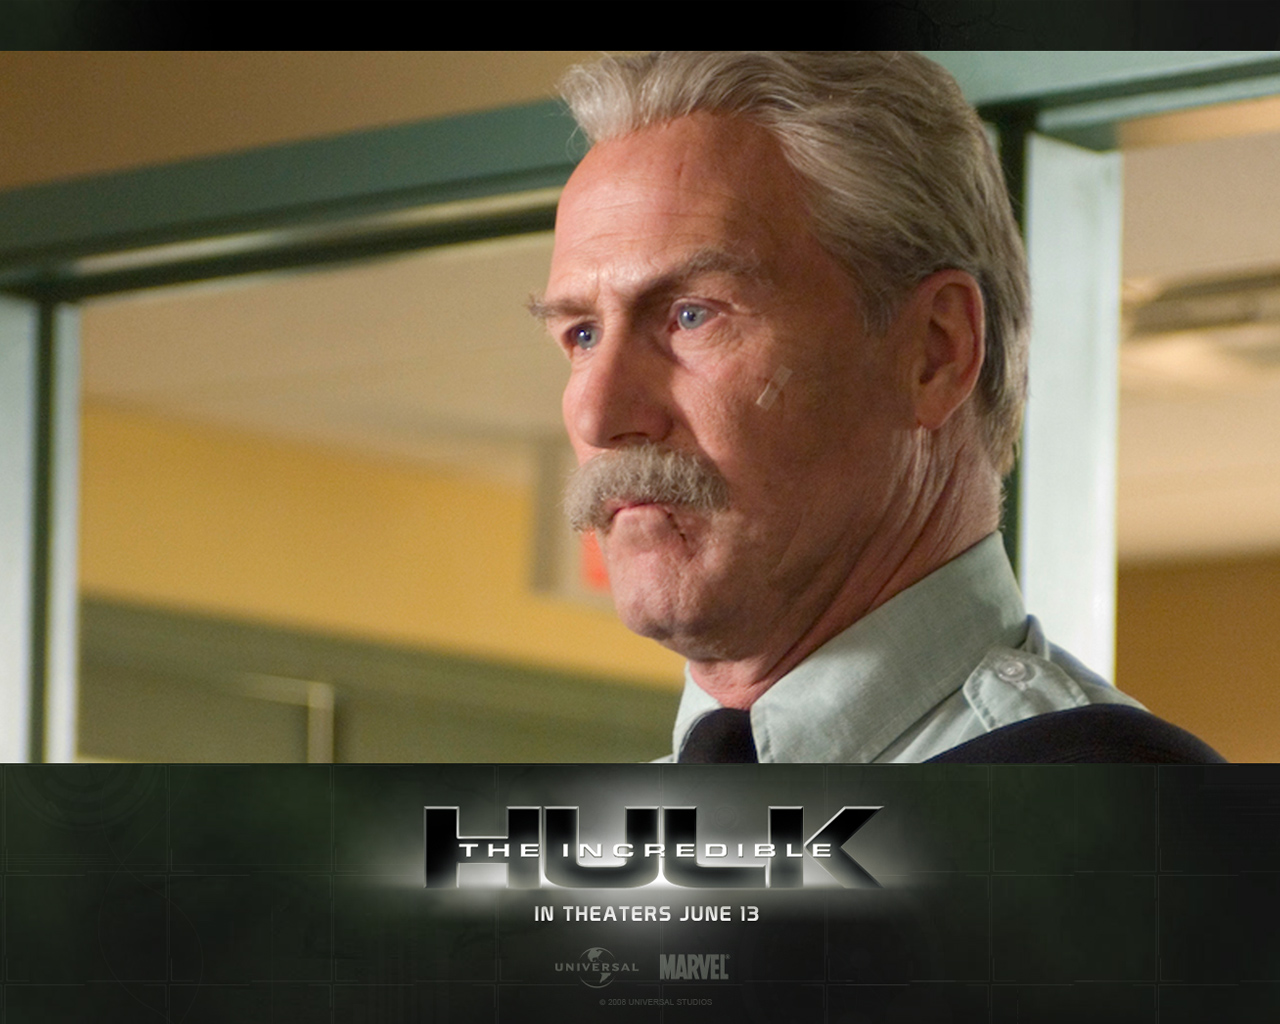 Download HQ The Incredible Hulk wallpaper / Movies / 1280x1024